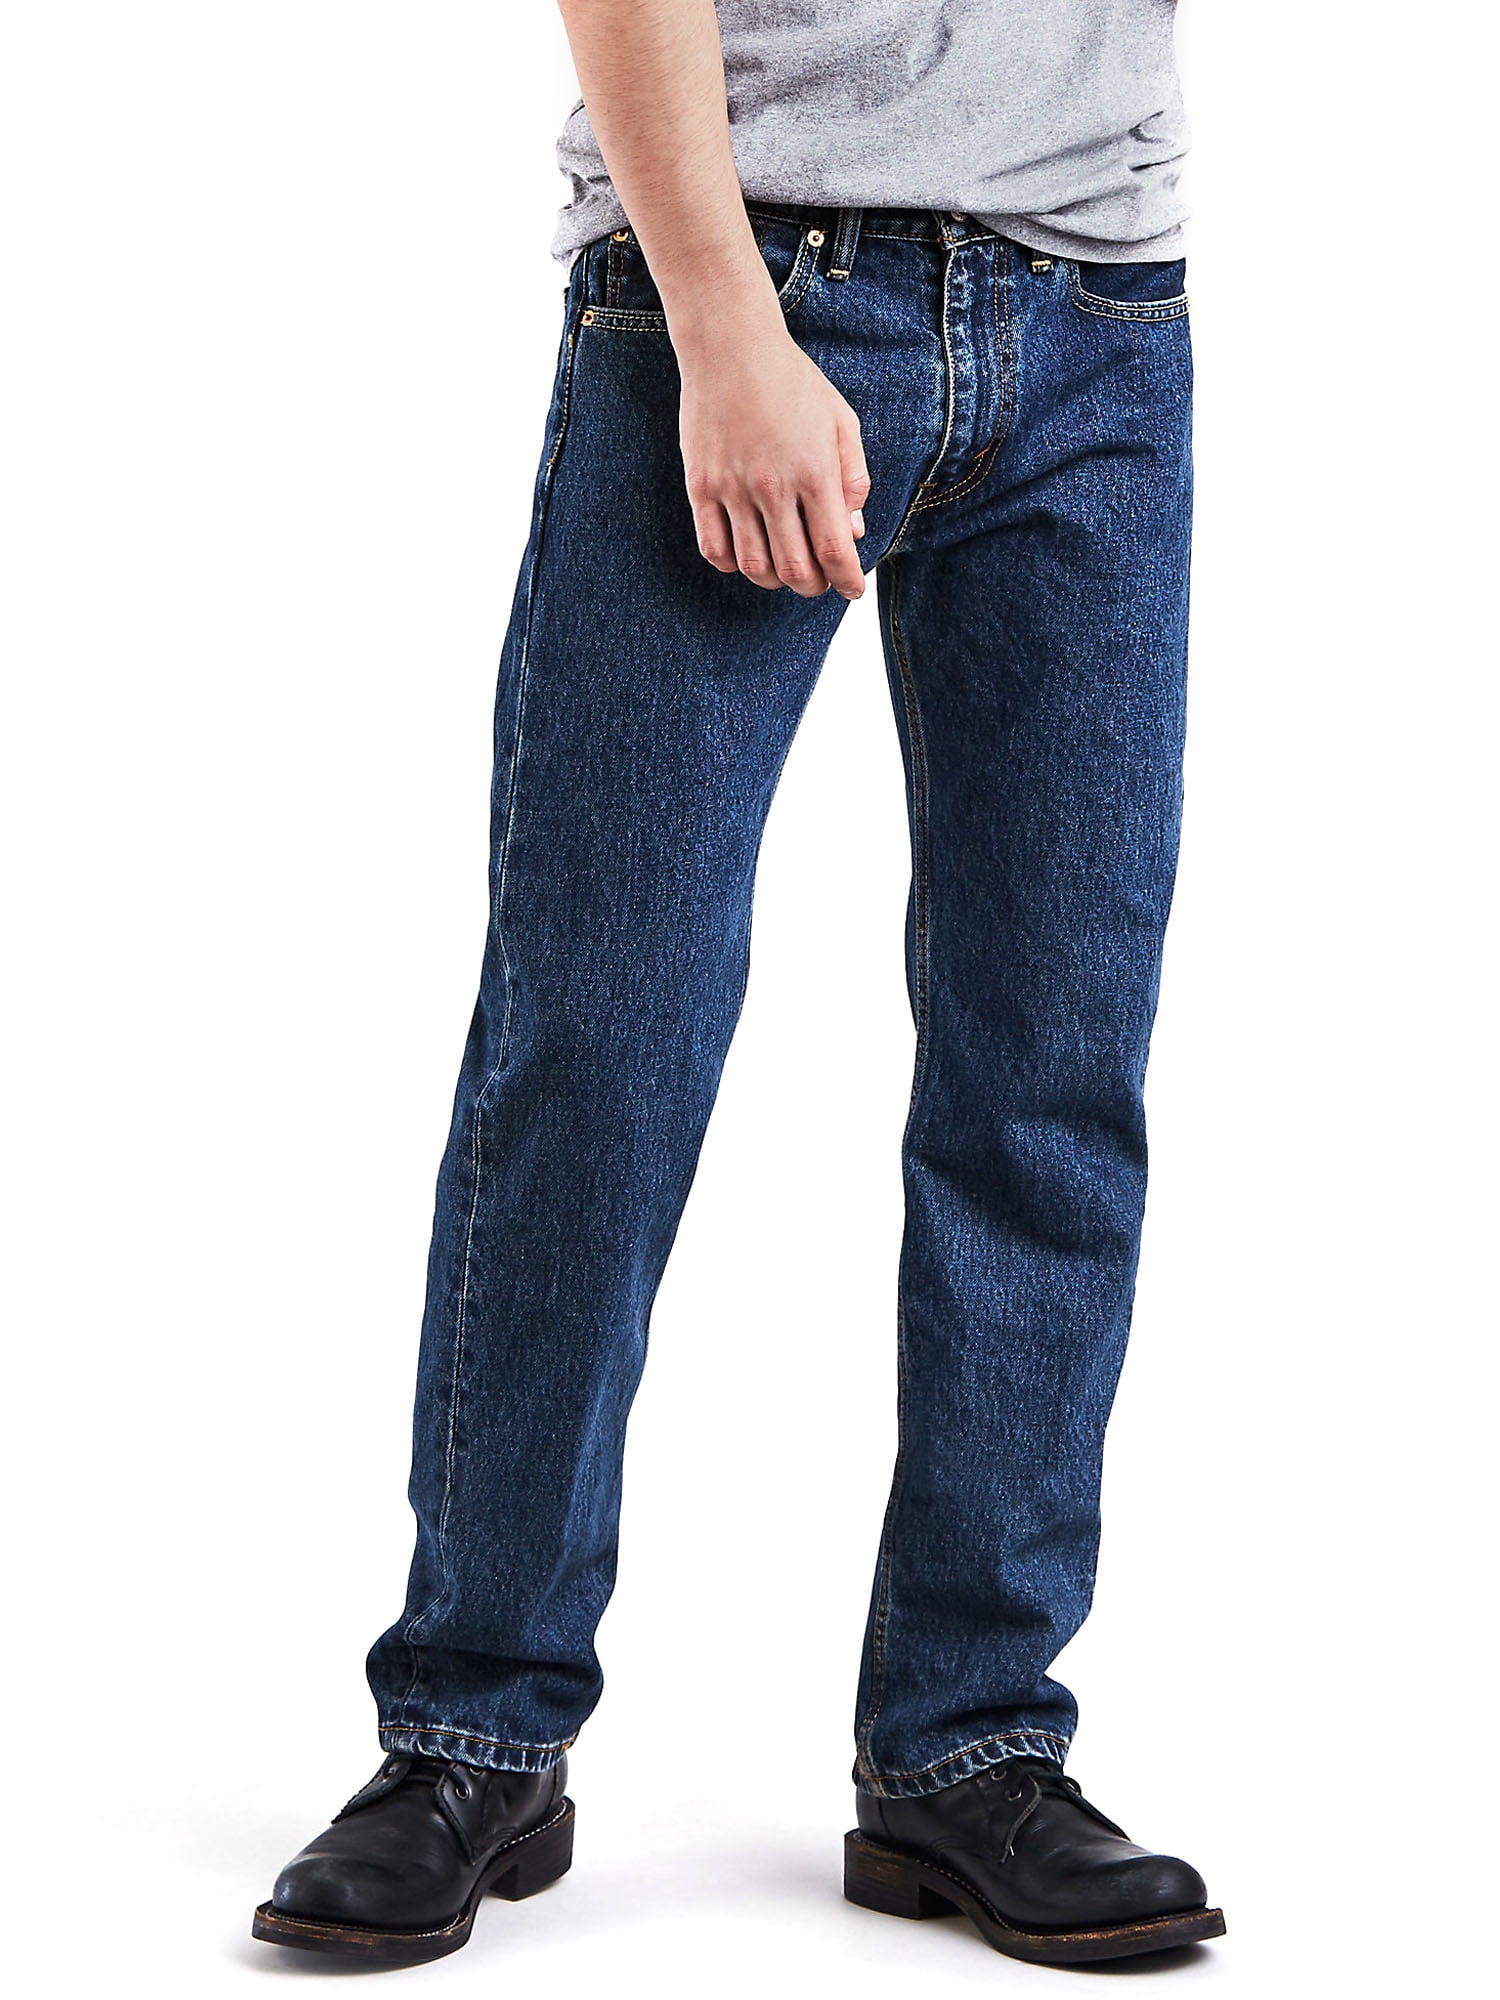 does walmart carry levi jeans